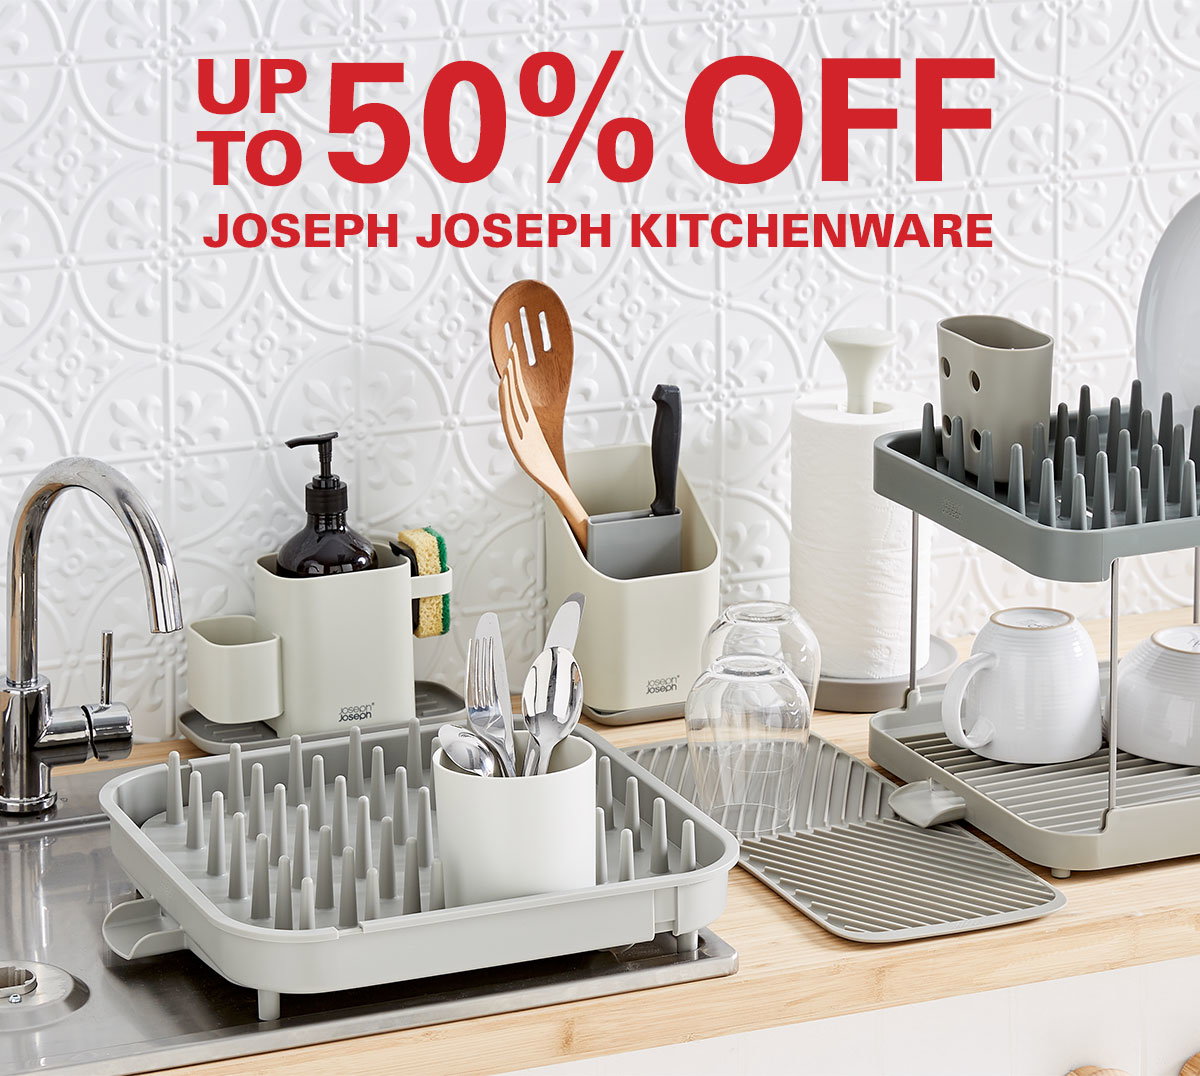 Joseph Joseph Kitchenware